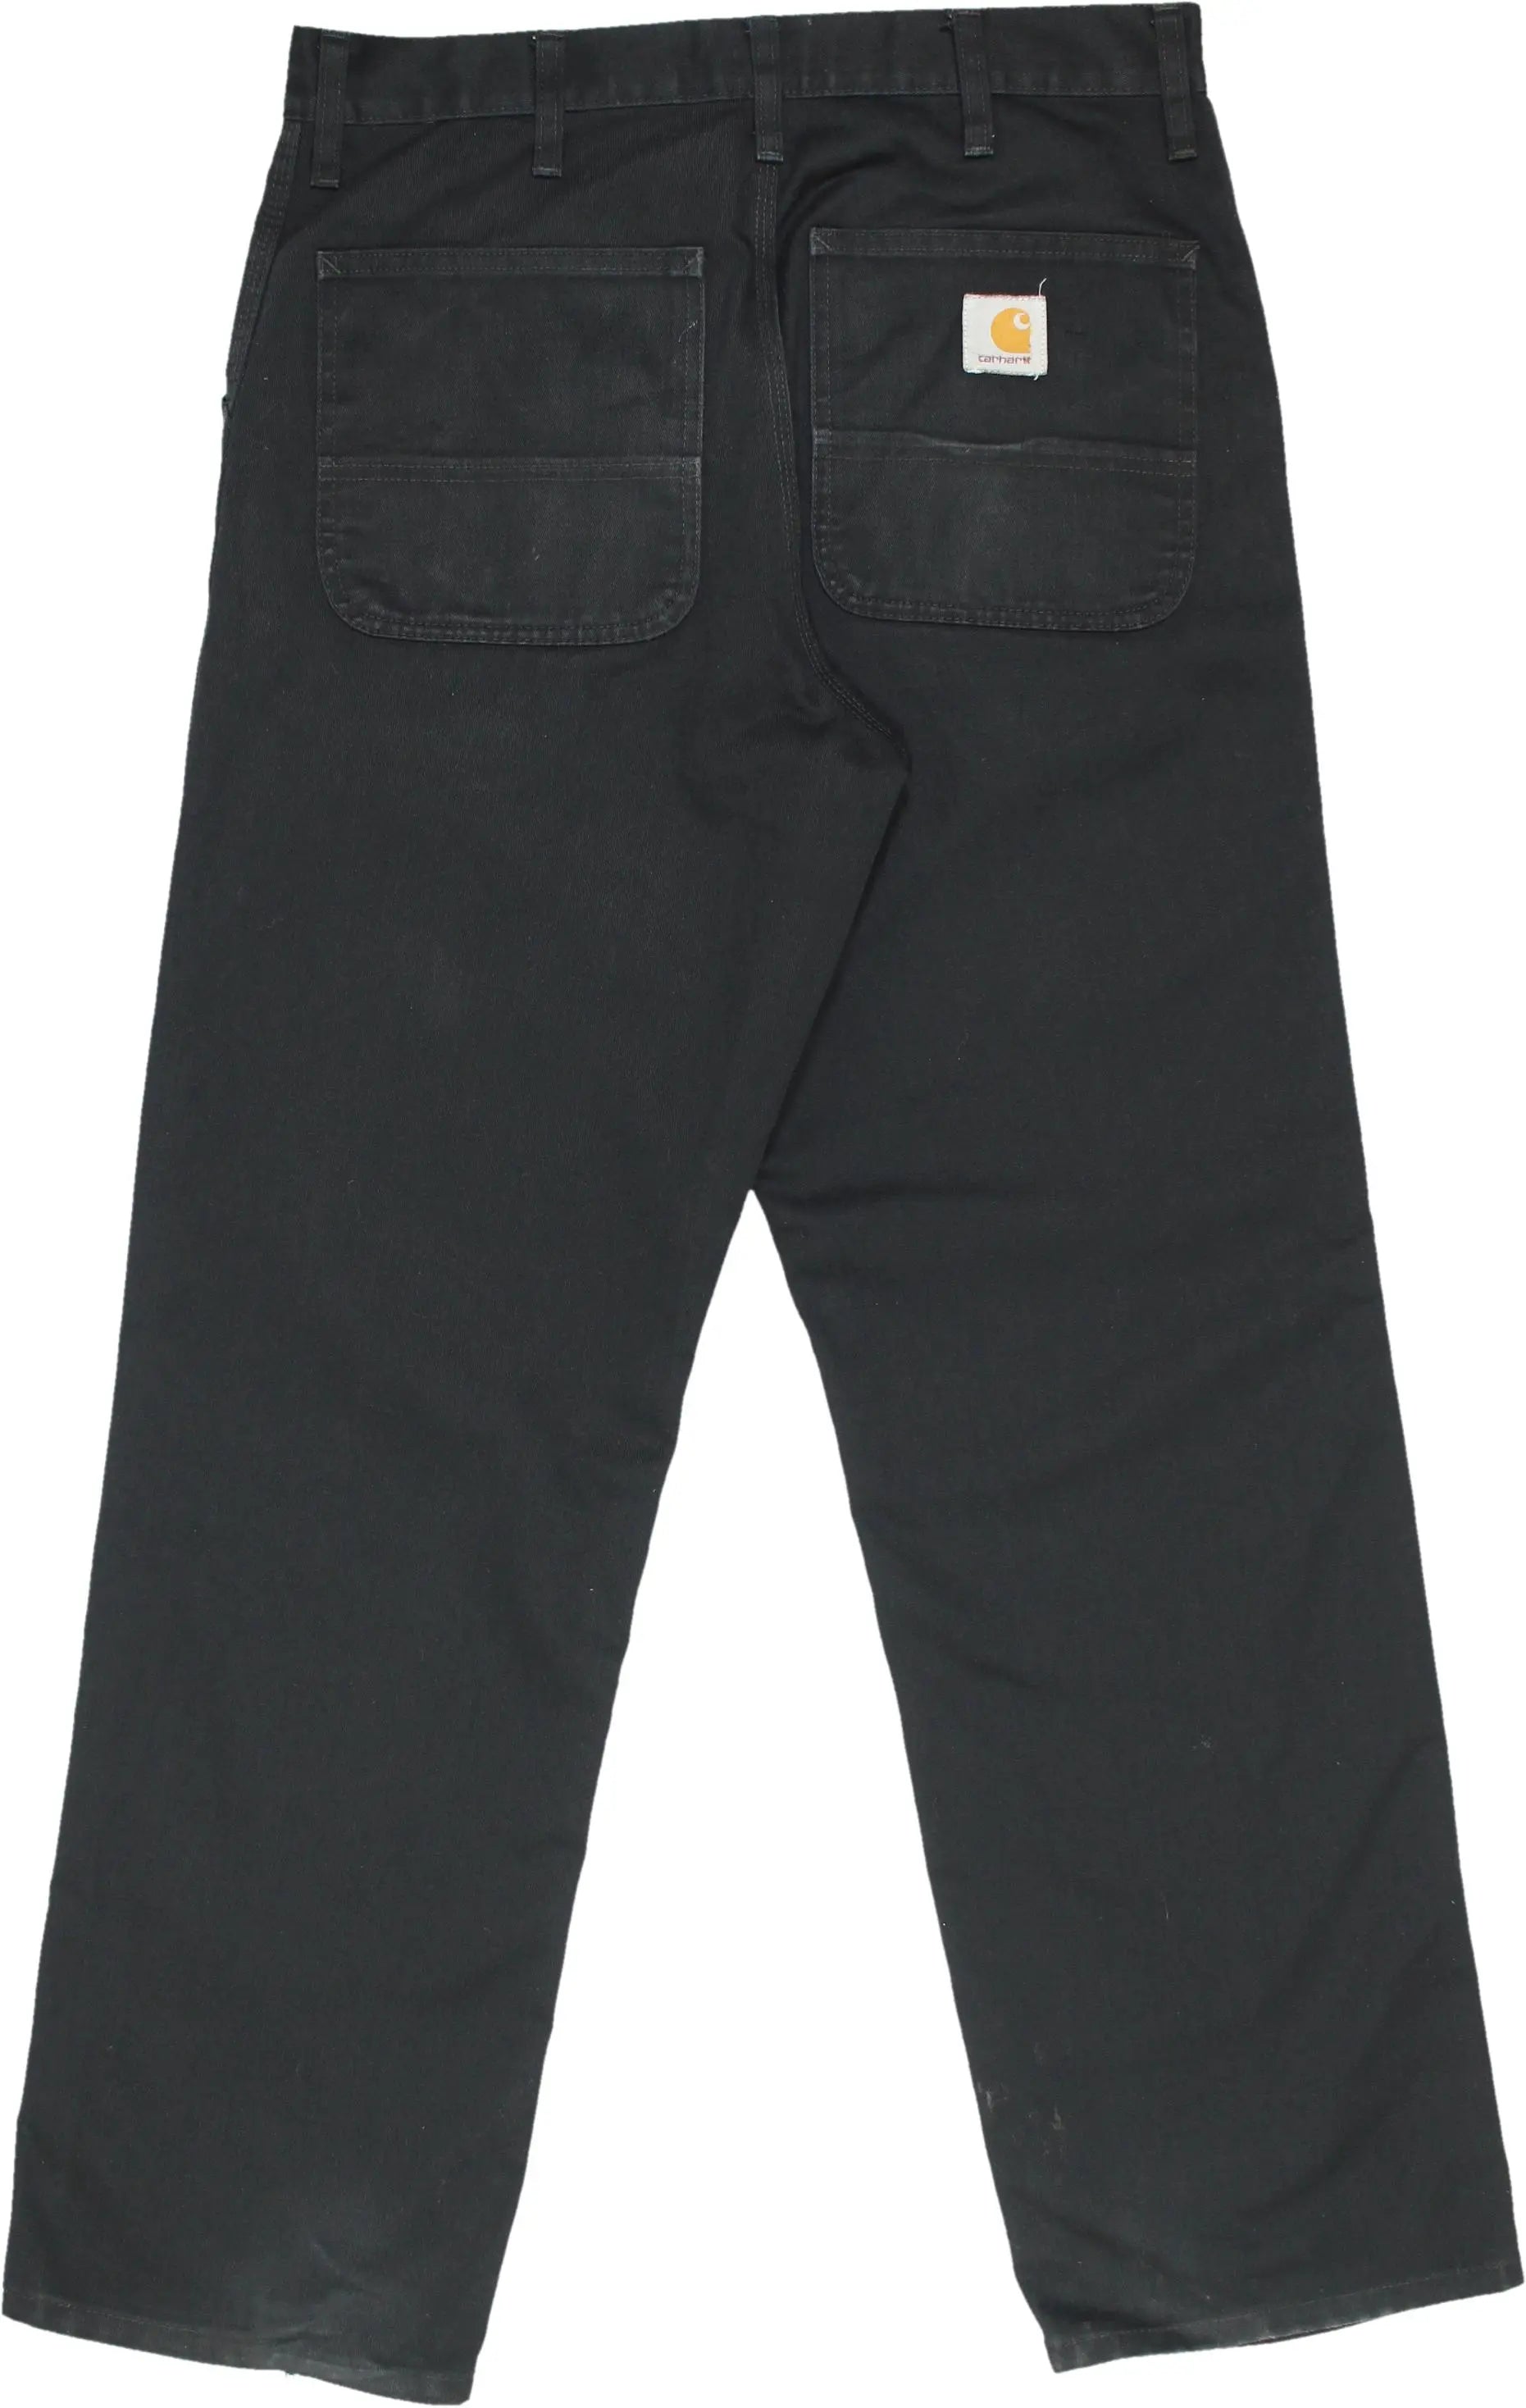 Carhartt - Carhartt Regular Black Pants- ThriftTale.com - Vintage and second handclothing